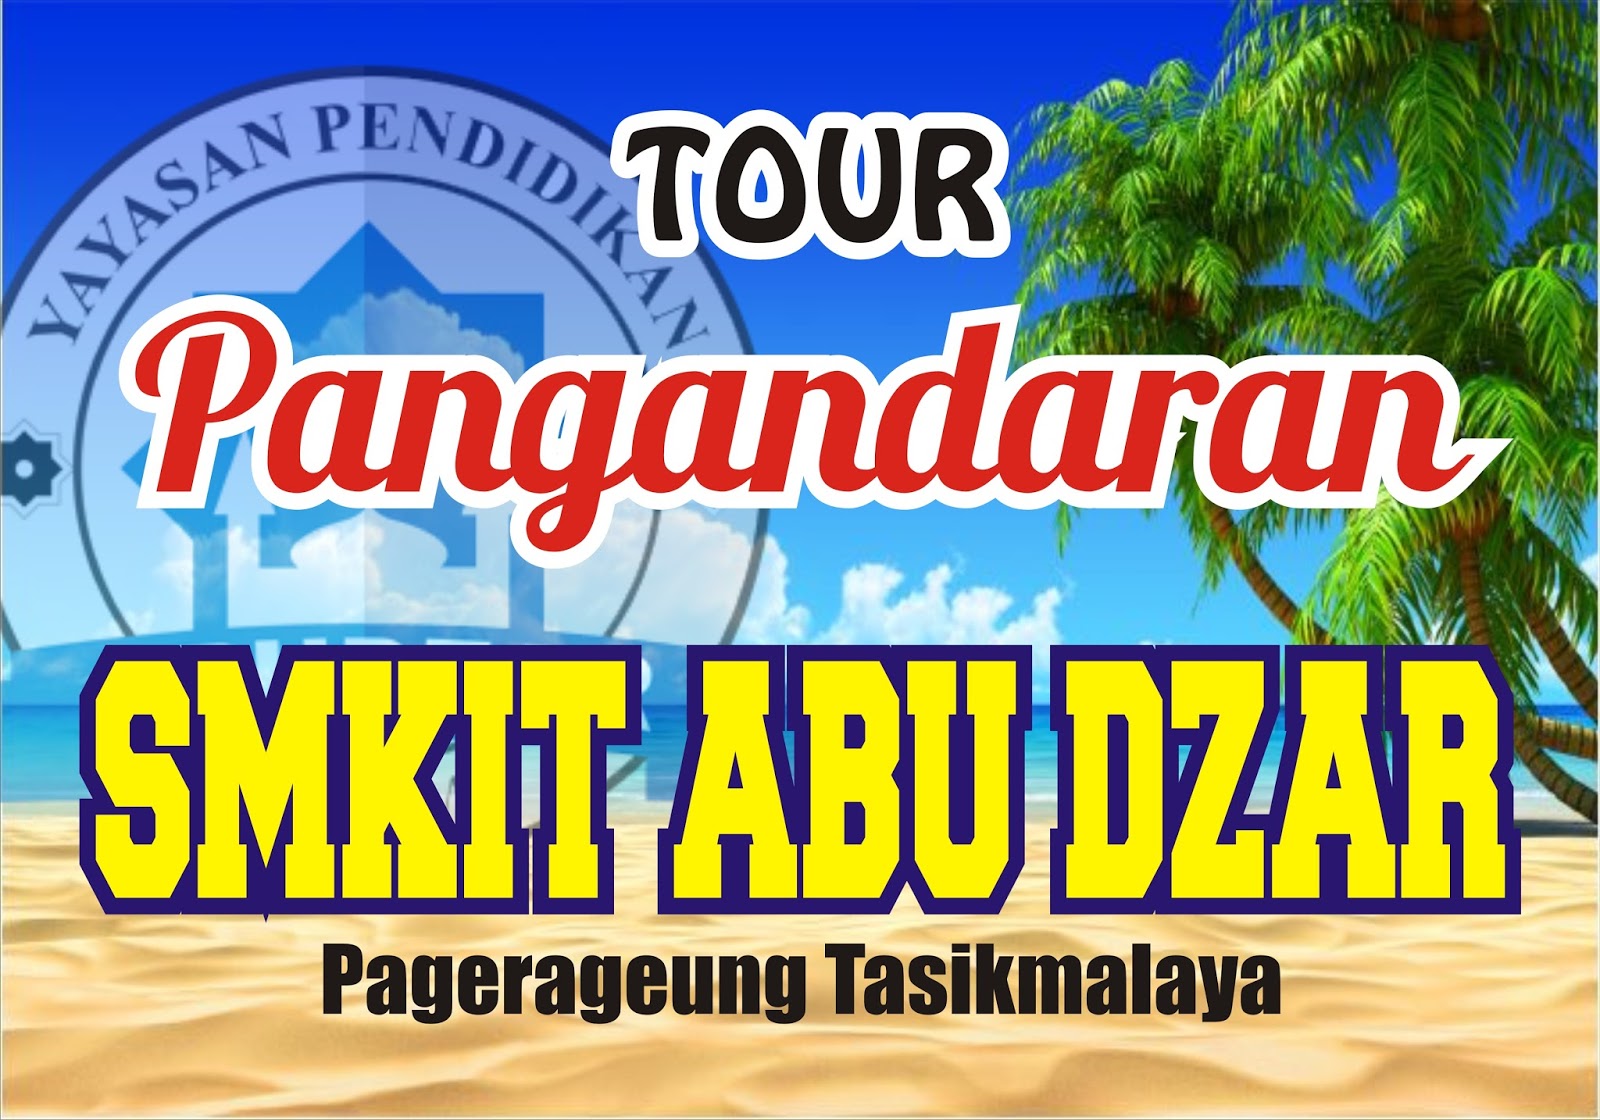 contoh banner tour wisata